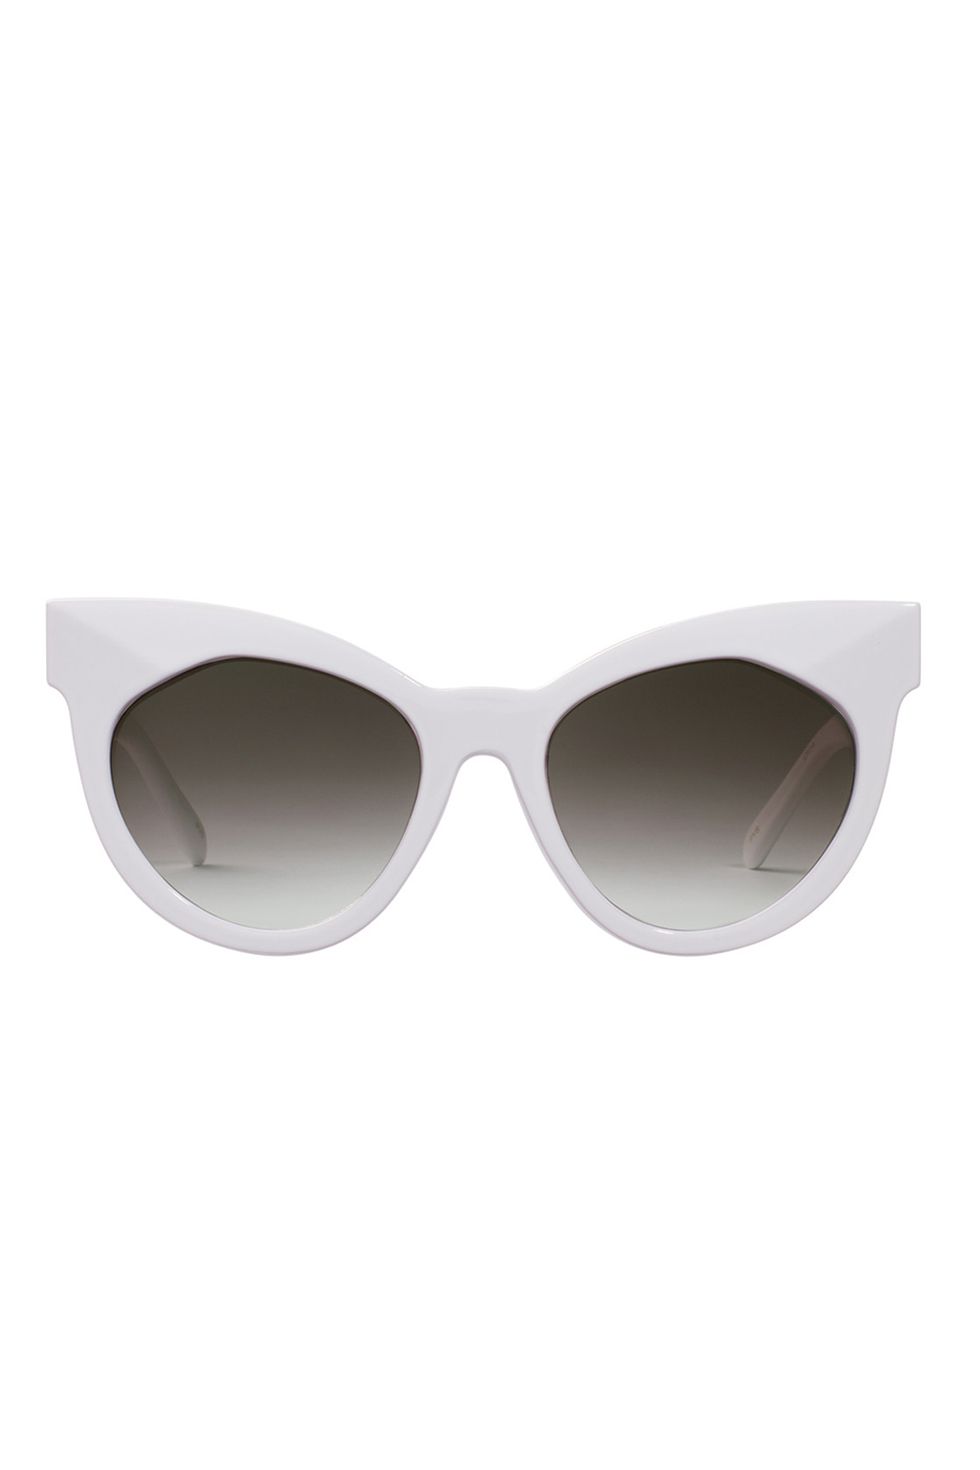 1489508680-hbz-perverse-sunglasses